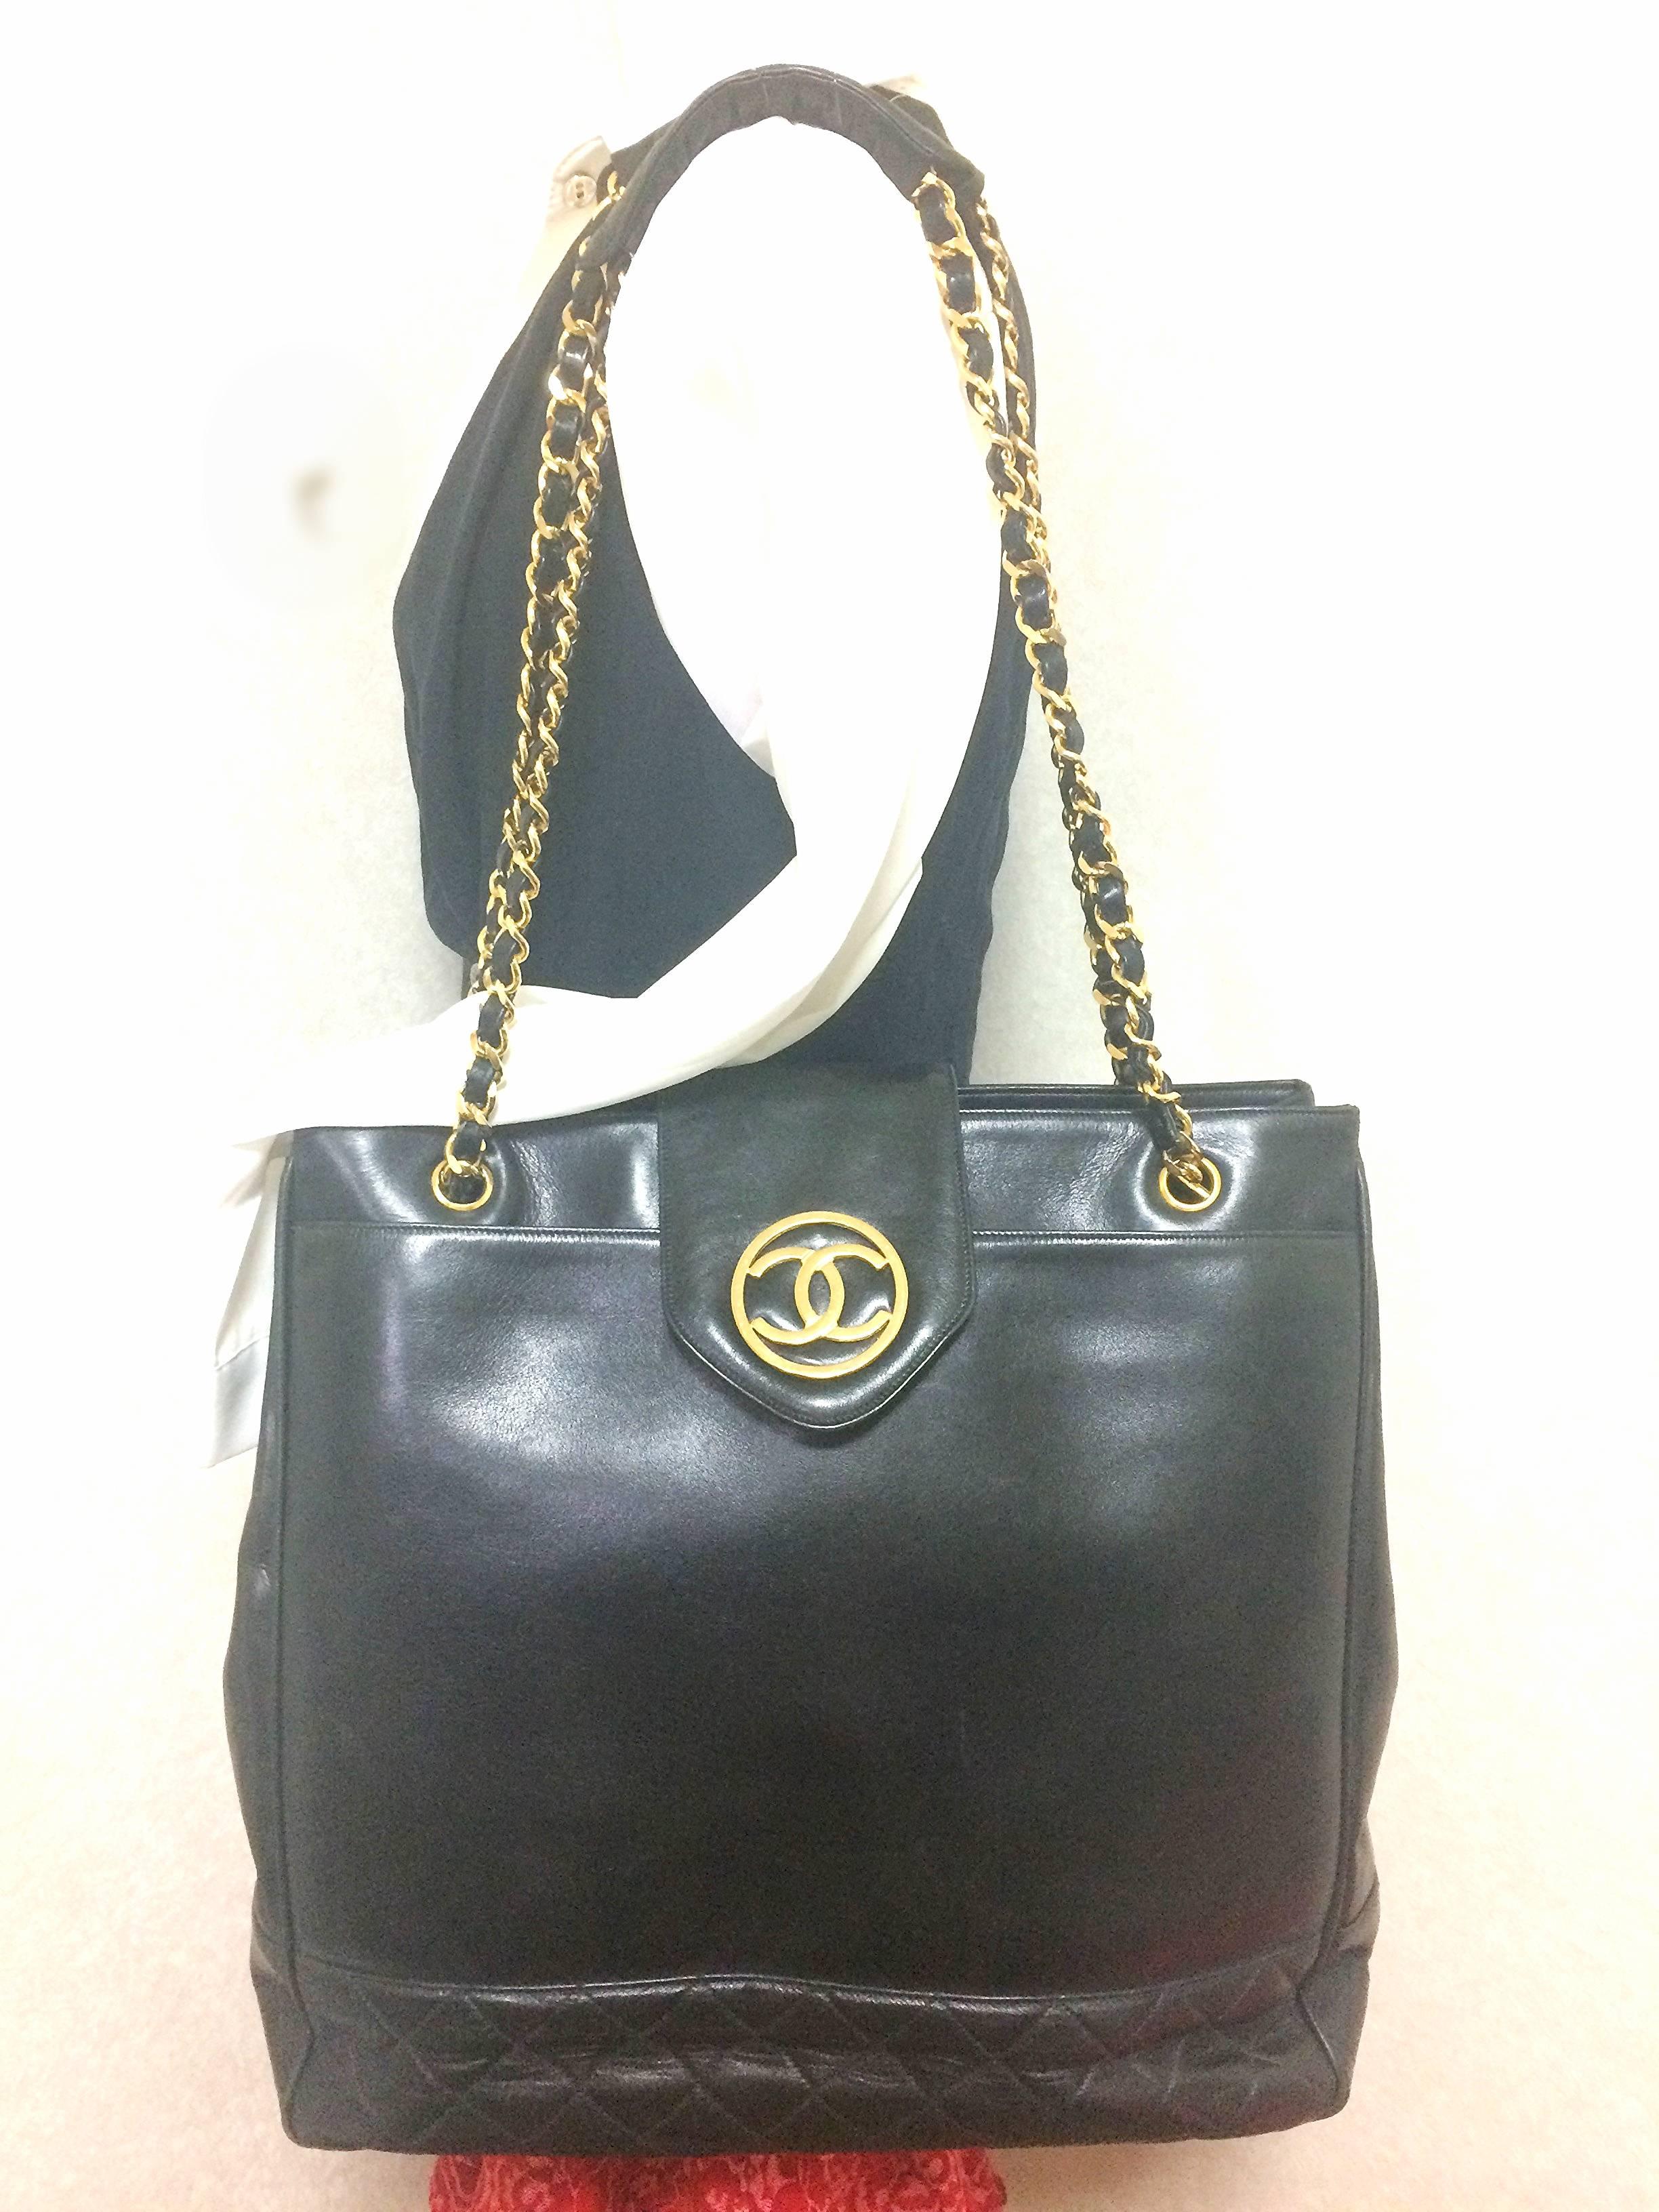 Vintage CHANEL black calf leather large chain shoulder tote bag with golden CC. 5